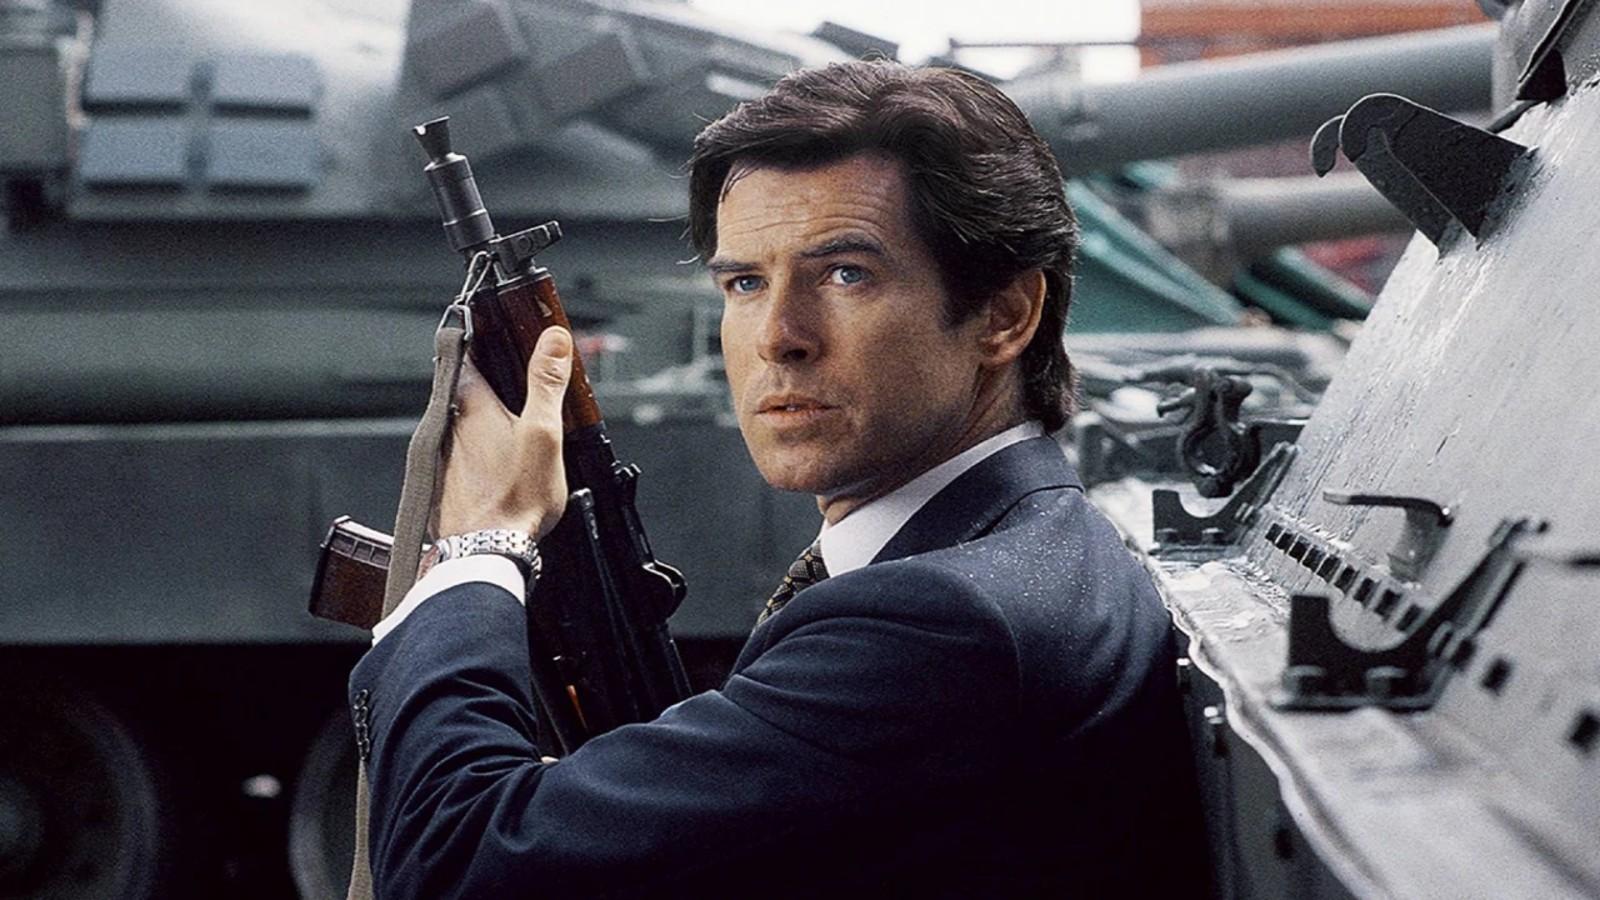 Pierce Brosnan holding a gun, on a tank, as James Bond.